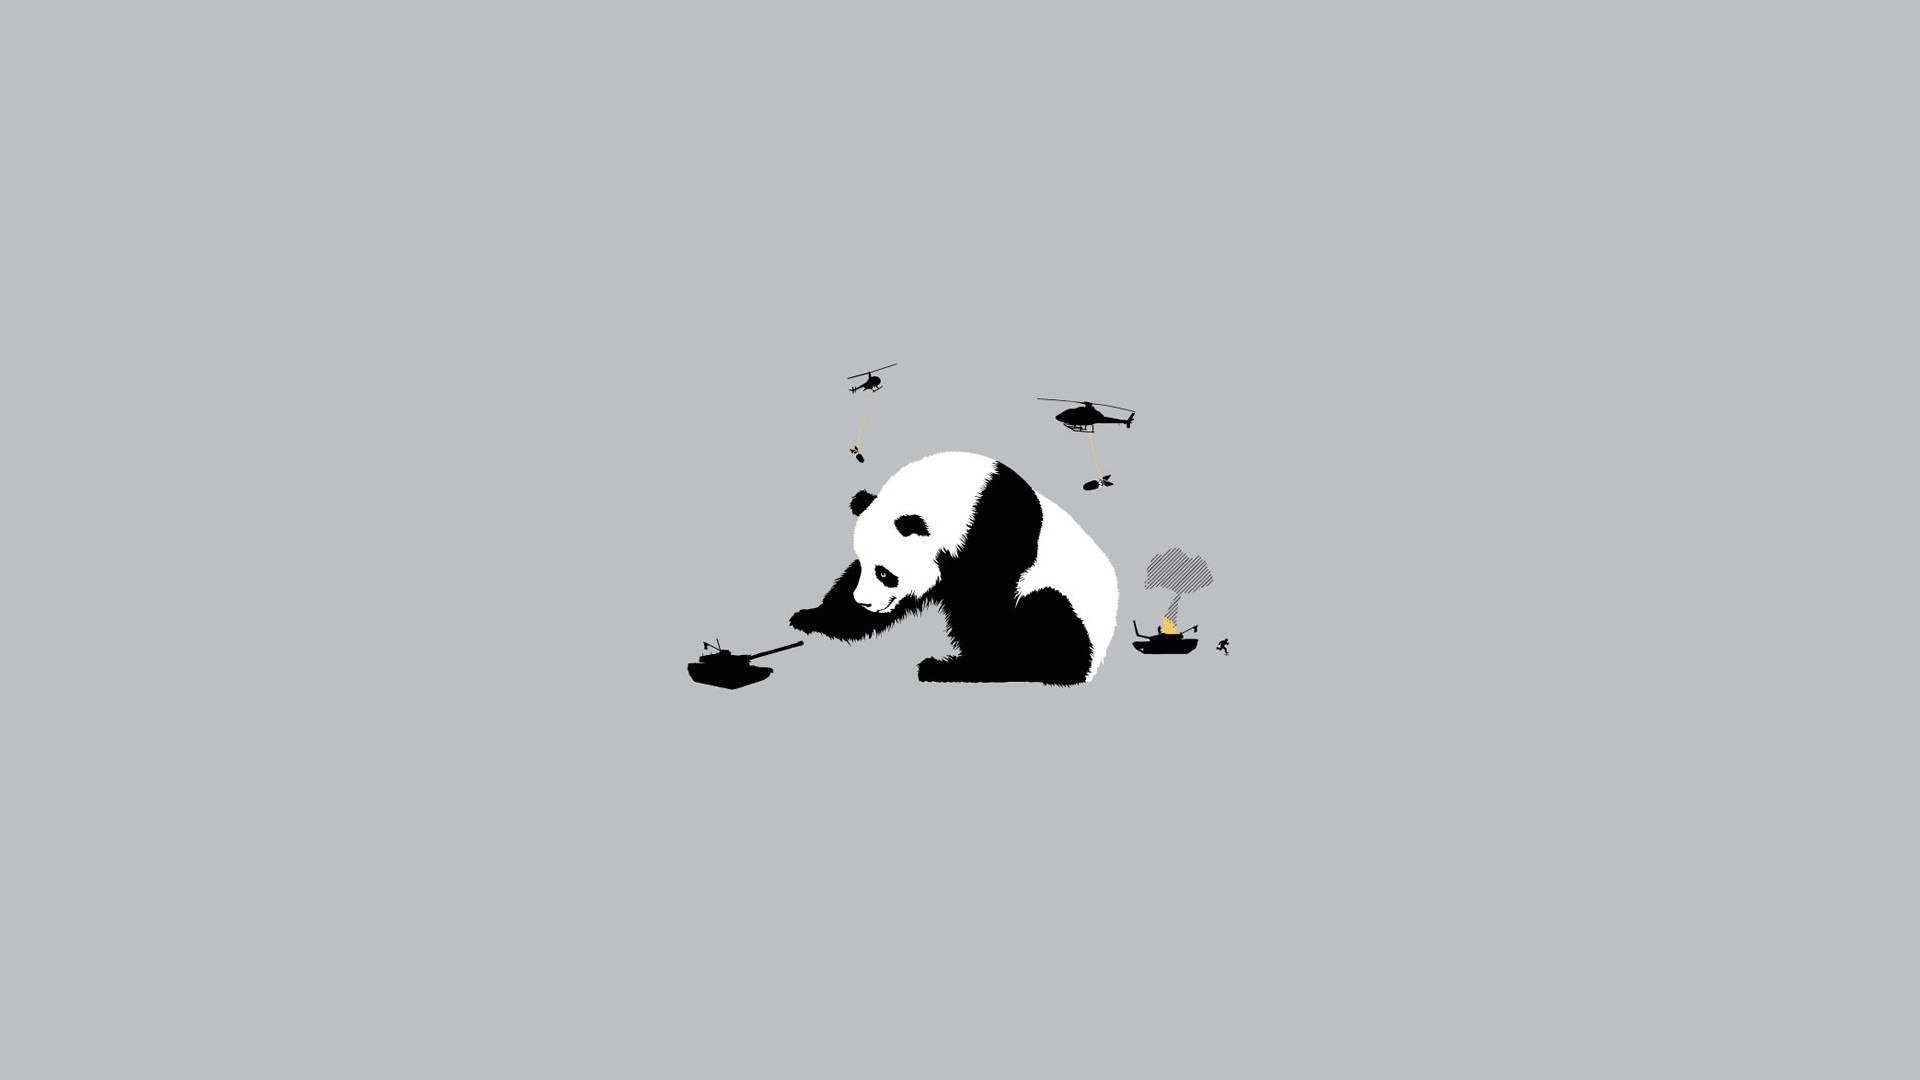 Abstract funny panda bears simple simplistic wallpaper